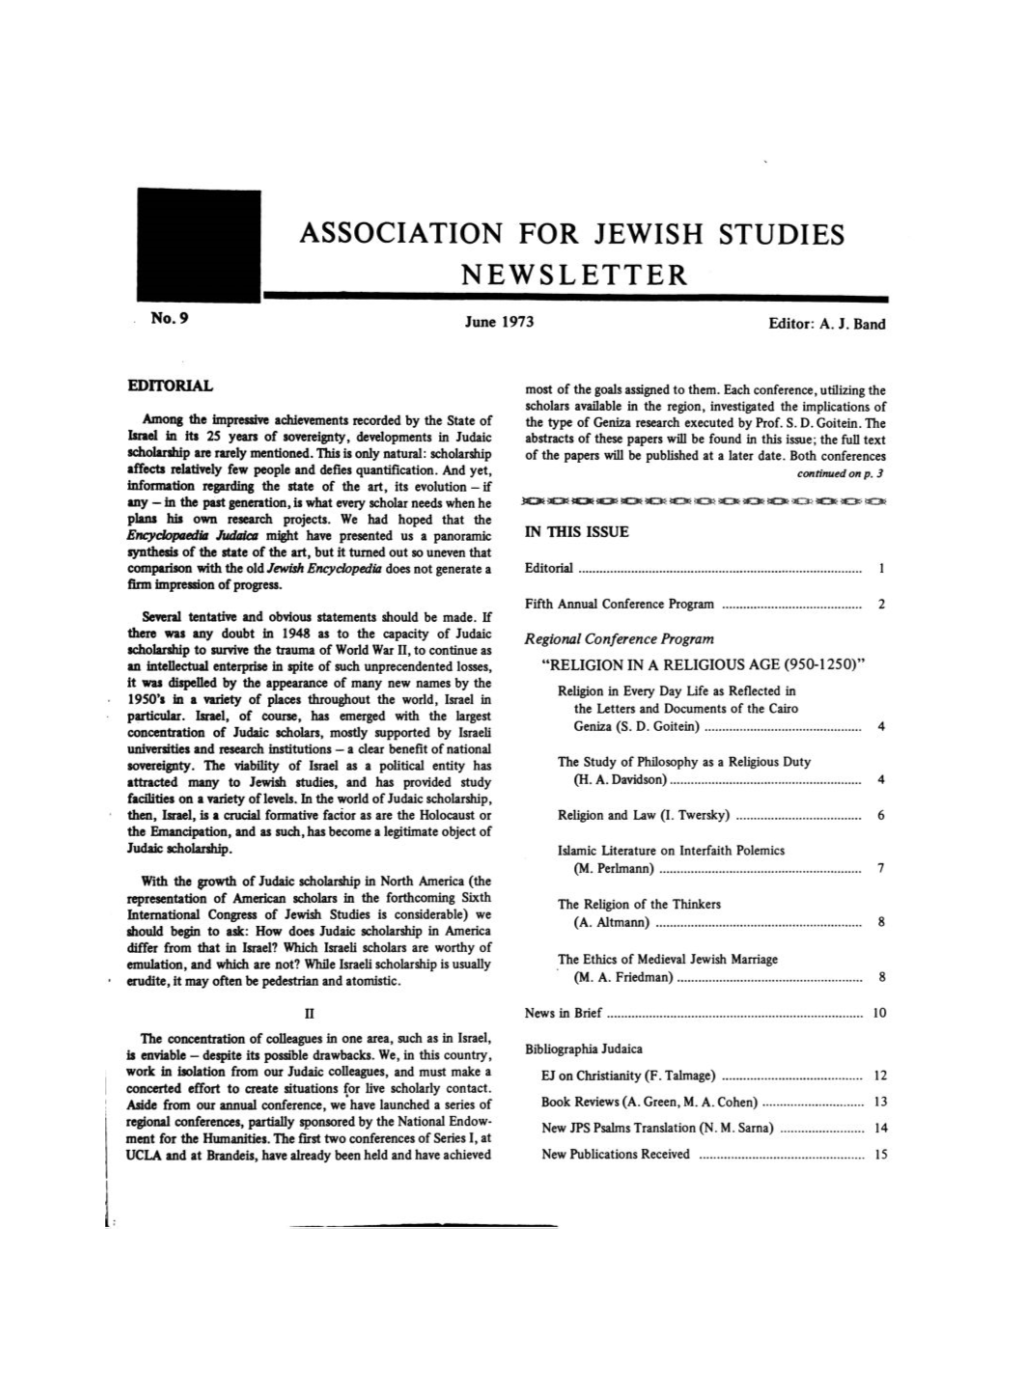 ASSOCIATION for JEWISH STUDIES NEWSLETTER No-9 June 1973 Editor: A